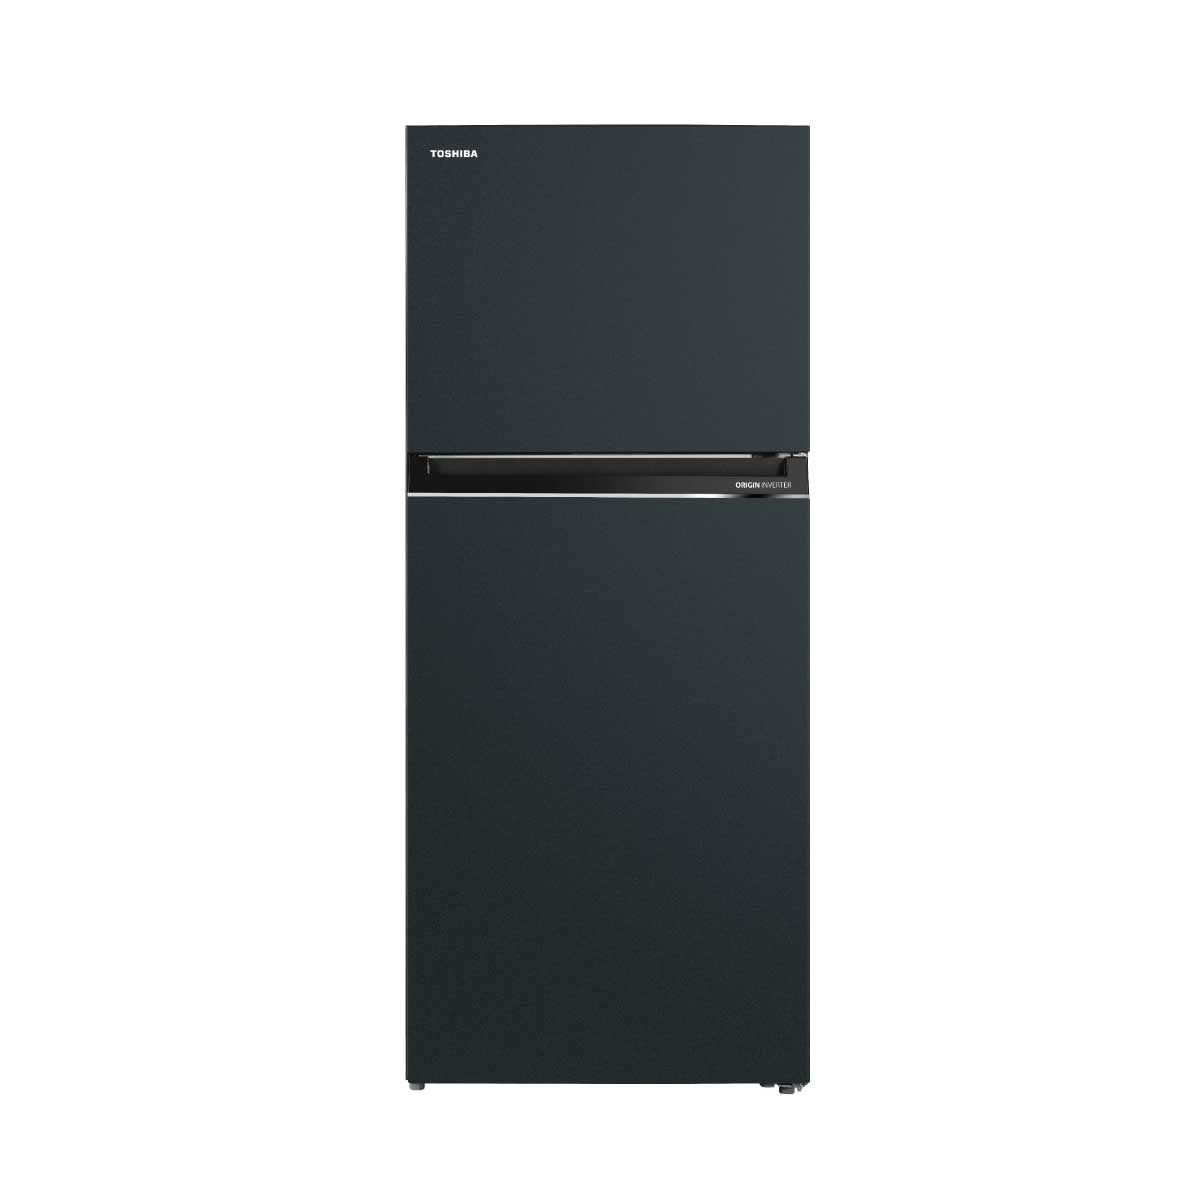 TOSHIBA ตู้เย็น 2 ประตู 14.5Q INVERTER สีเทาดำ รุ่นGR-RT558WE-PMT(52)